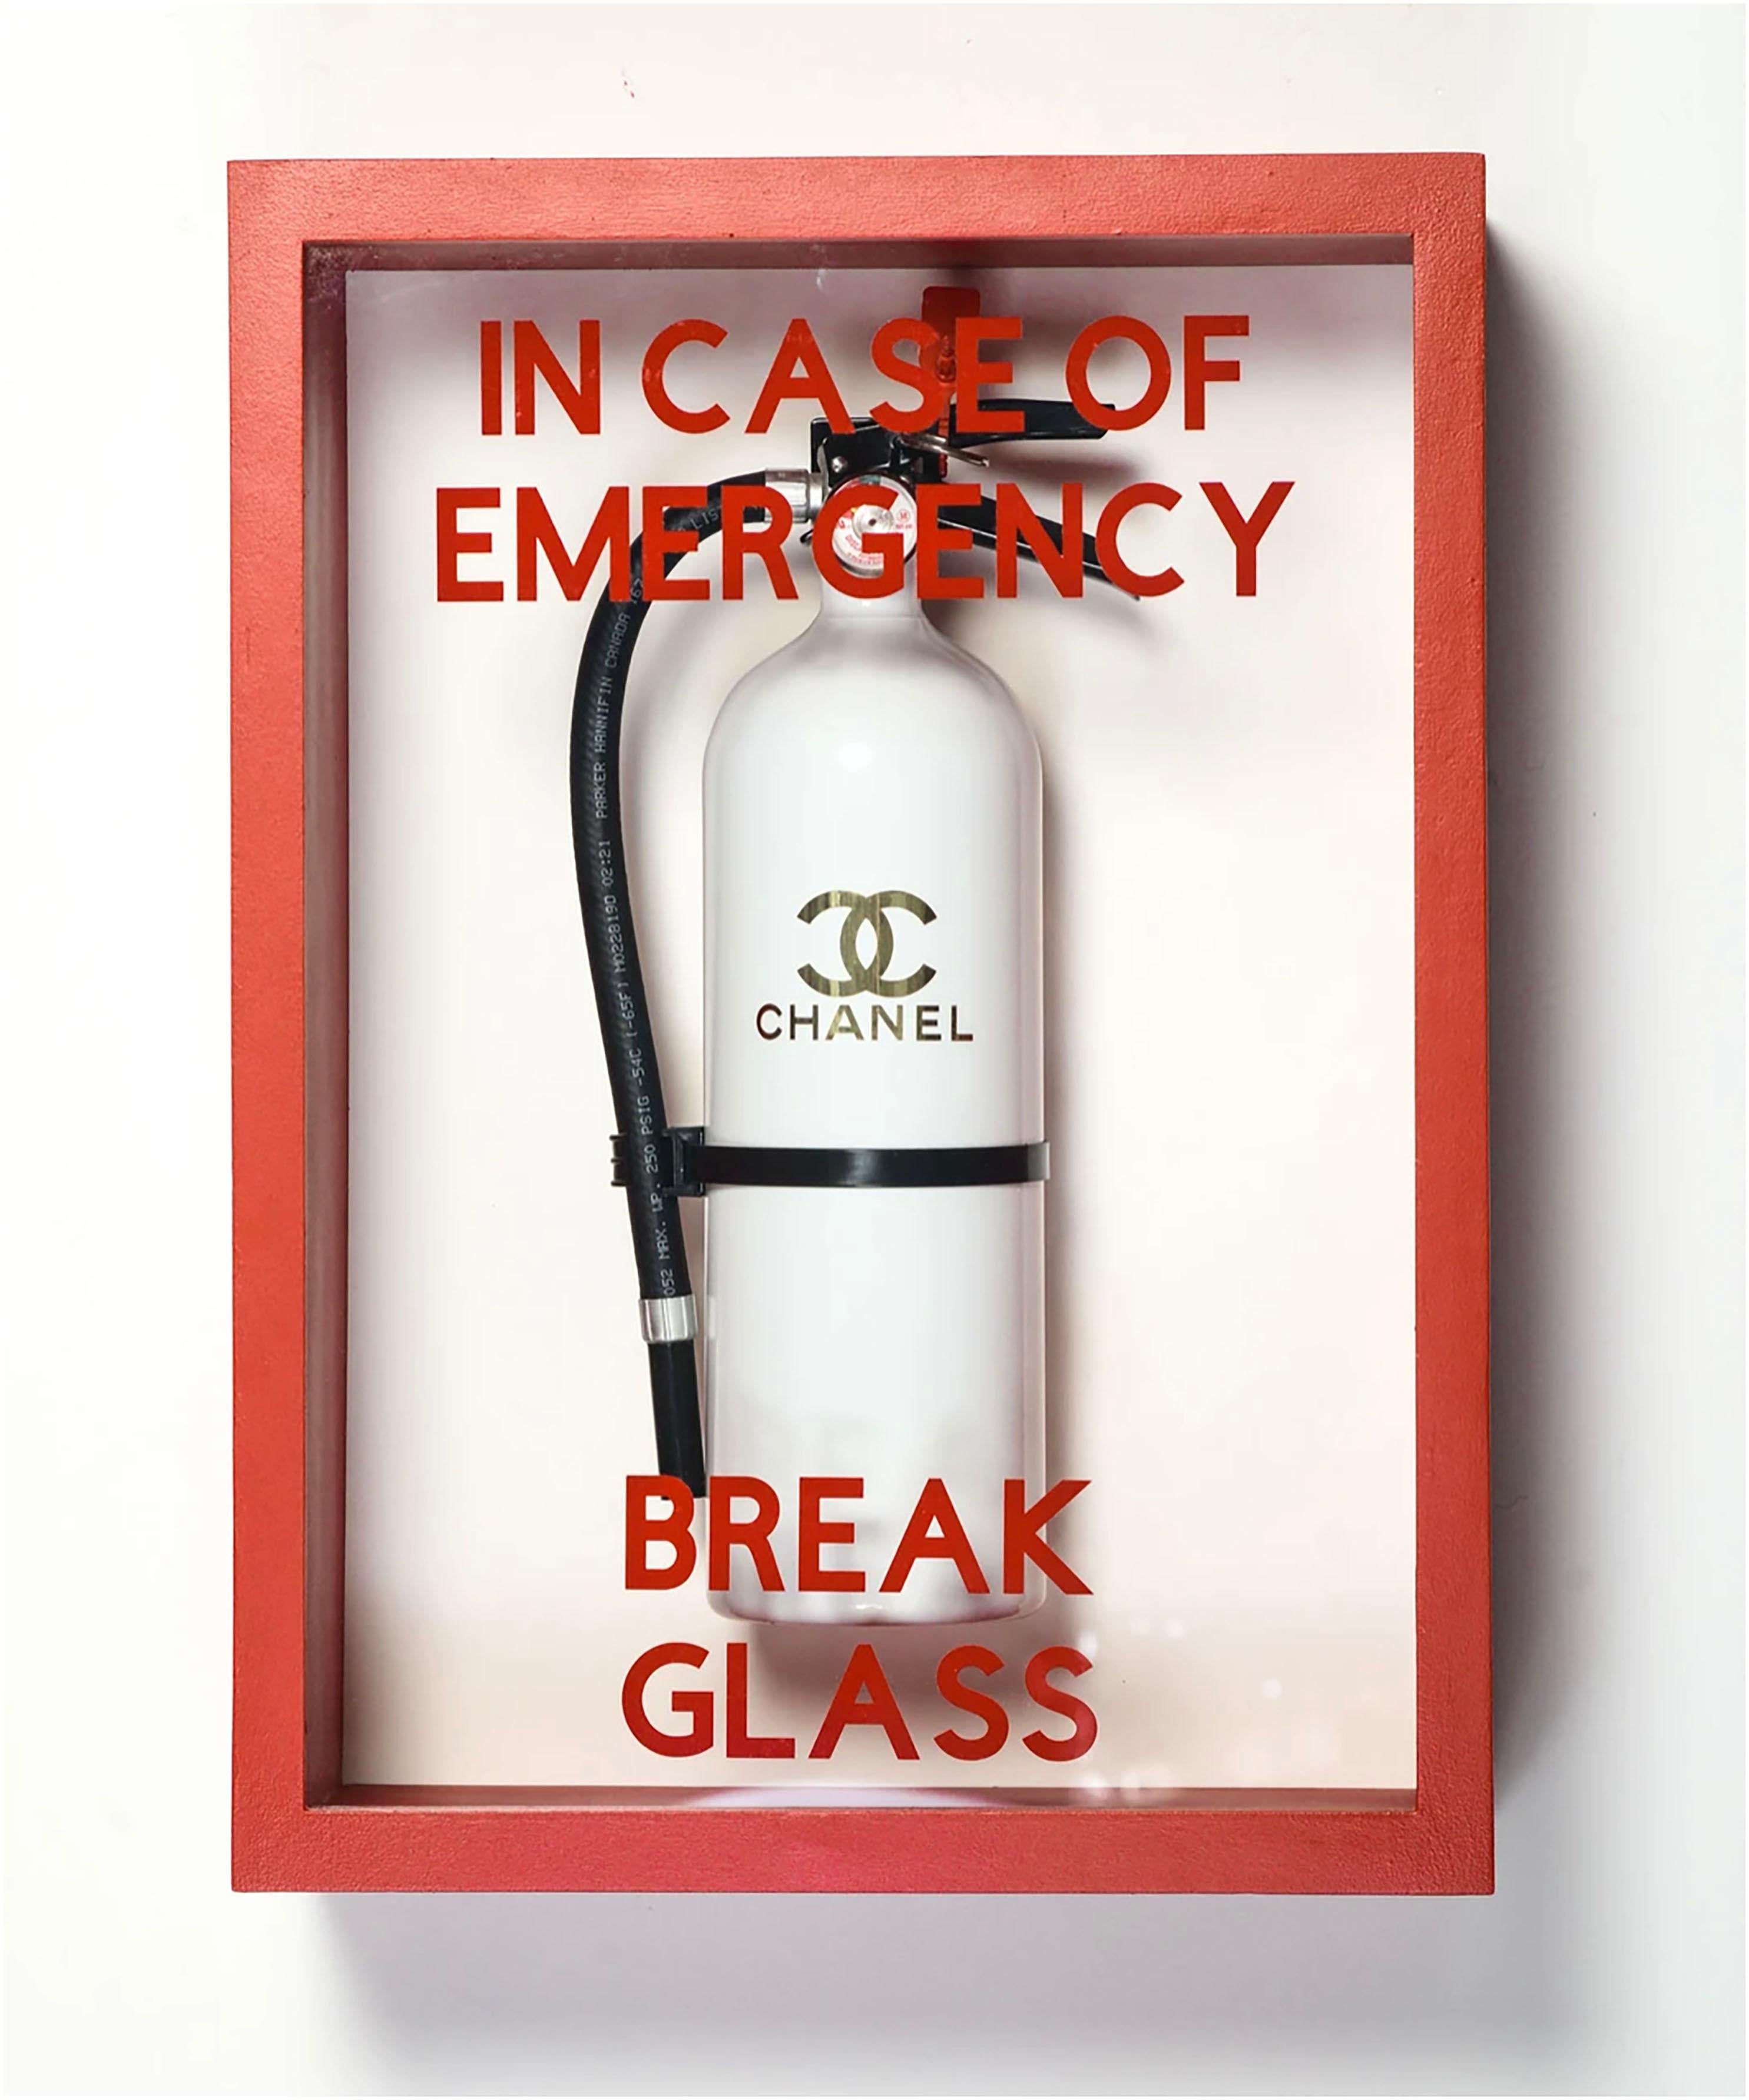 "In Case of Emergency Break Glass" Chanel Luxury Brand Edition FireExtinguisher  - Sculpture by Plastic Jesus